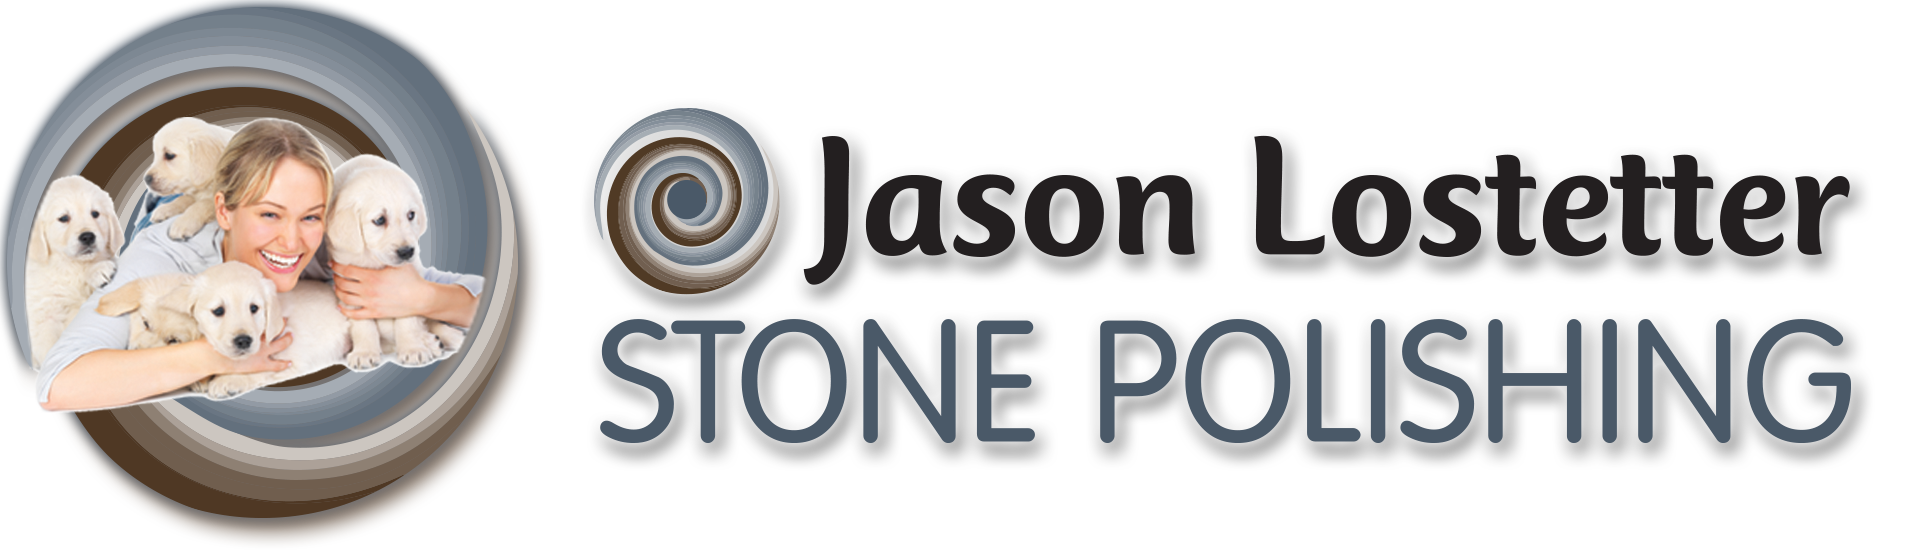 Jason Lostetter Stone Polishing